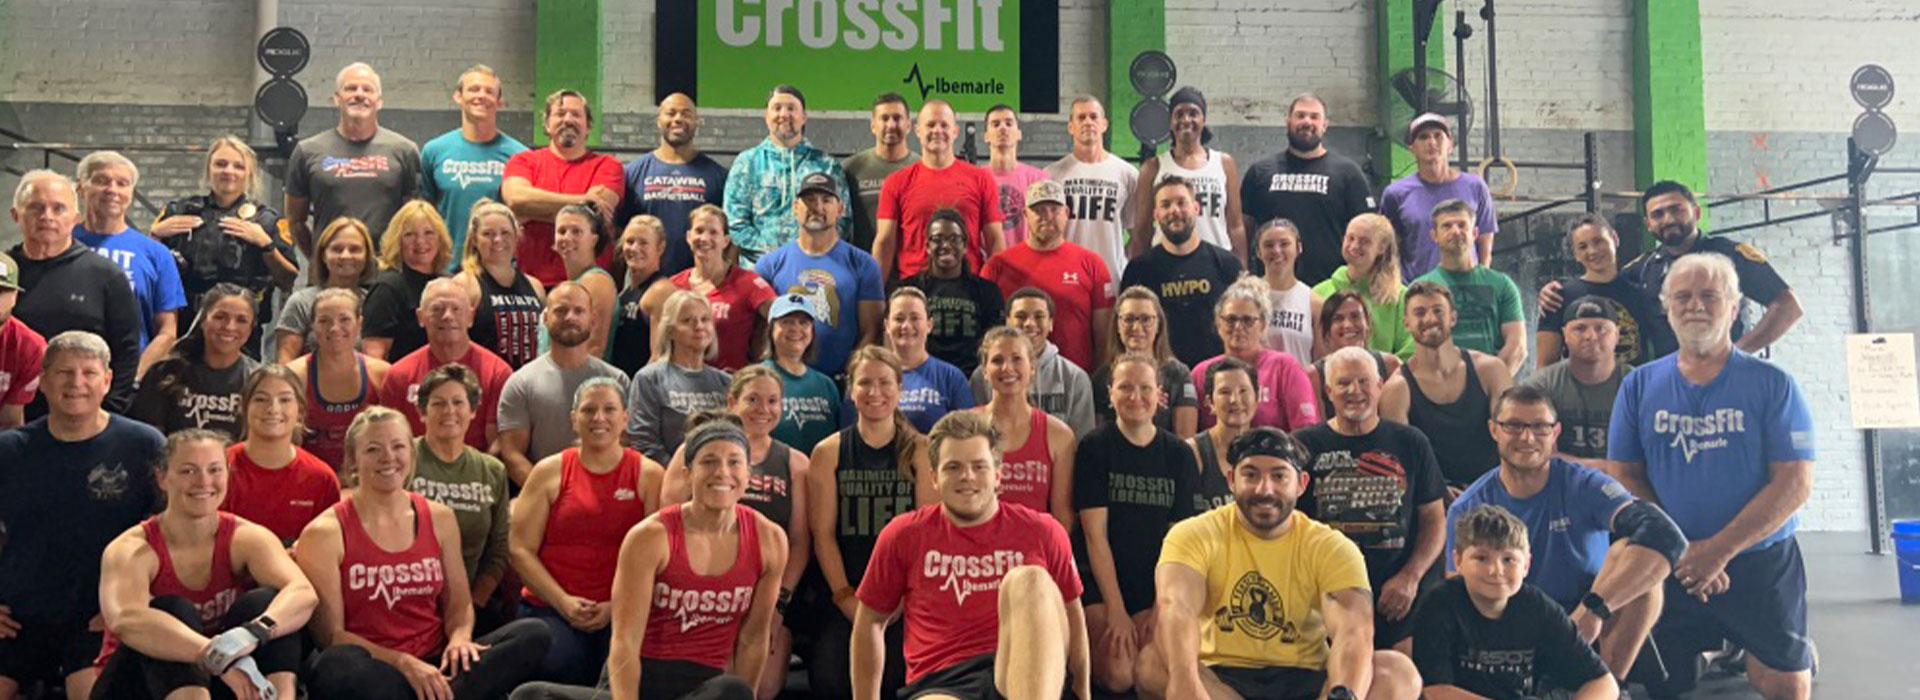 CrossFit In Albemarle, North Carolina